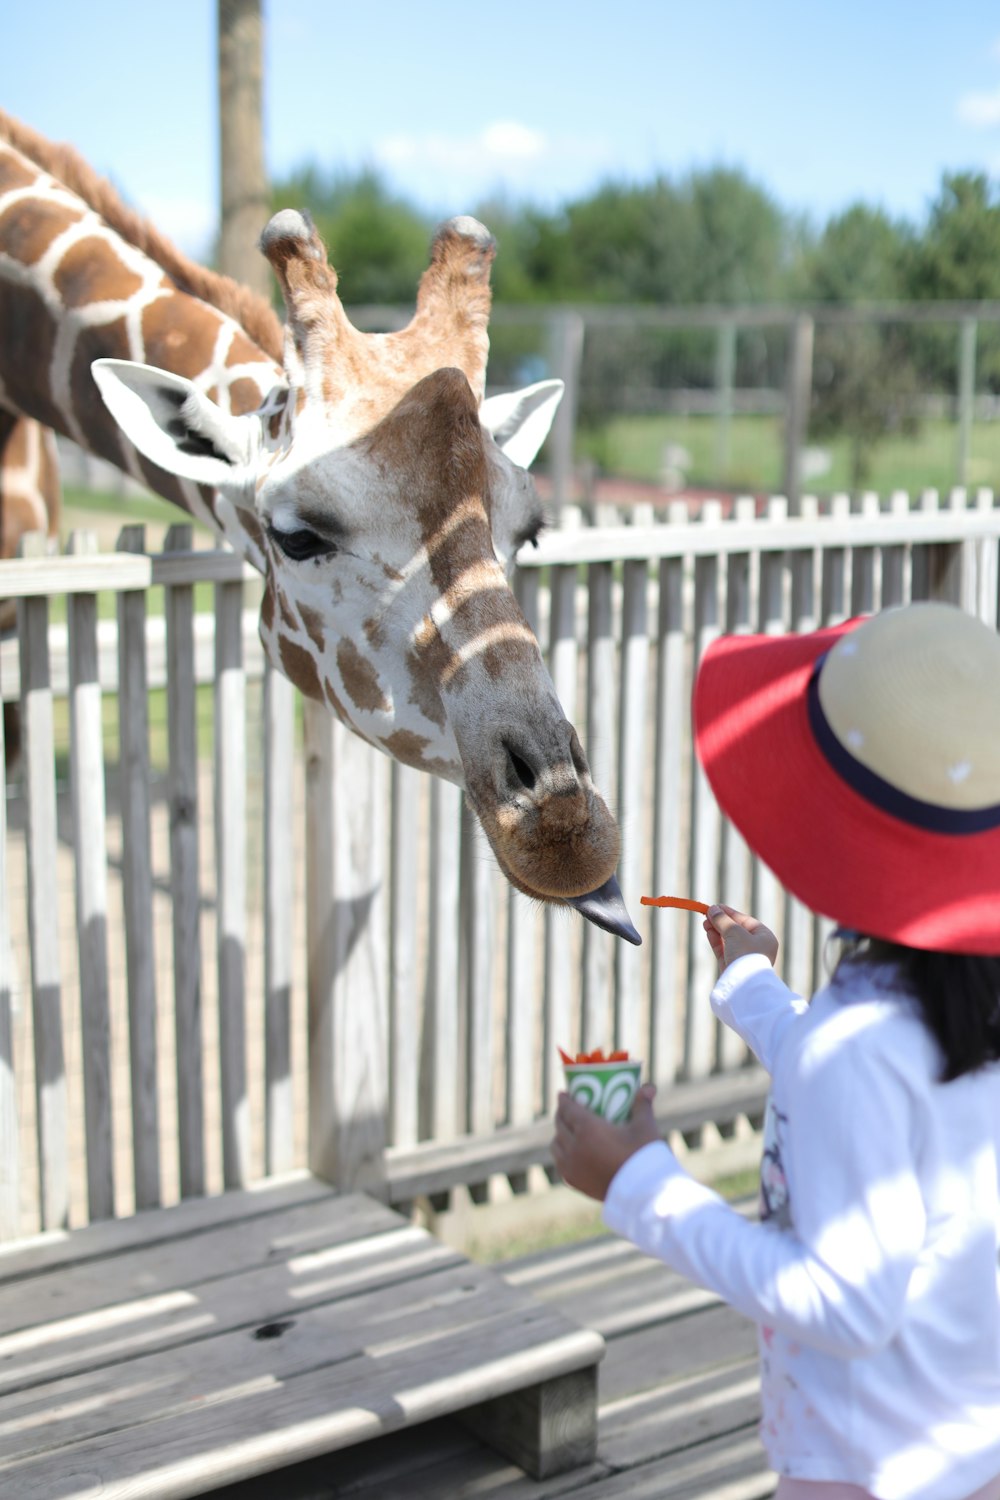 a little girl feeding a giraffe at a zoo